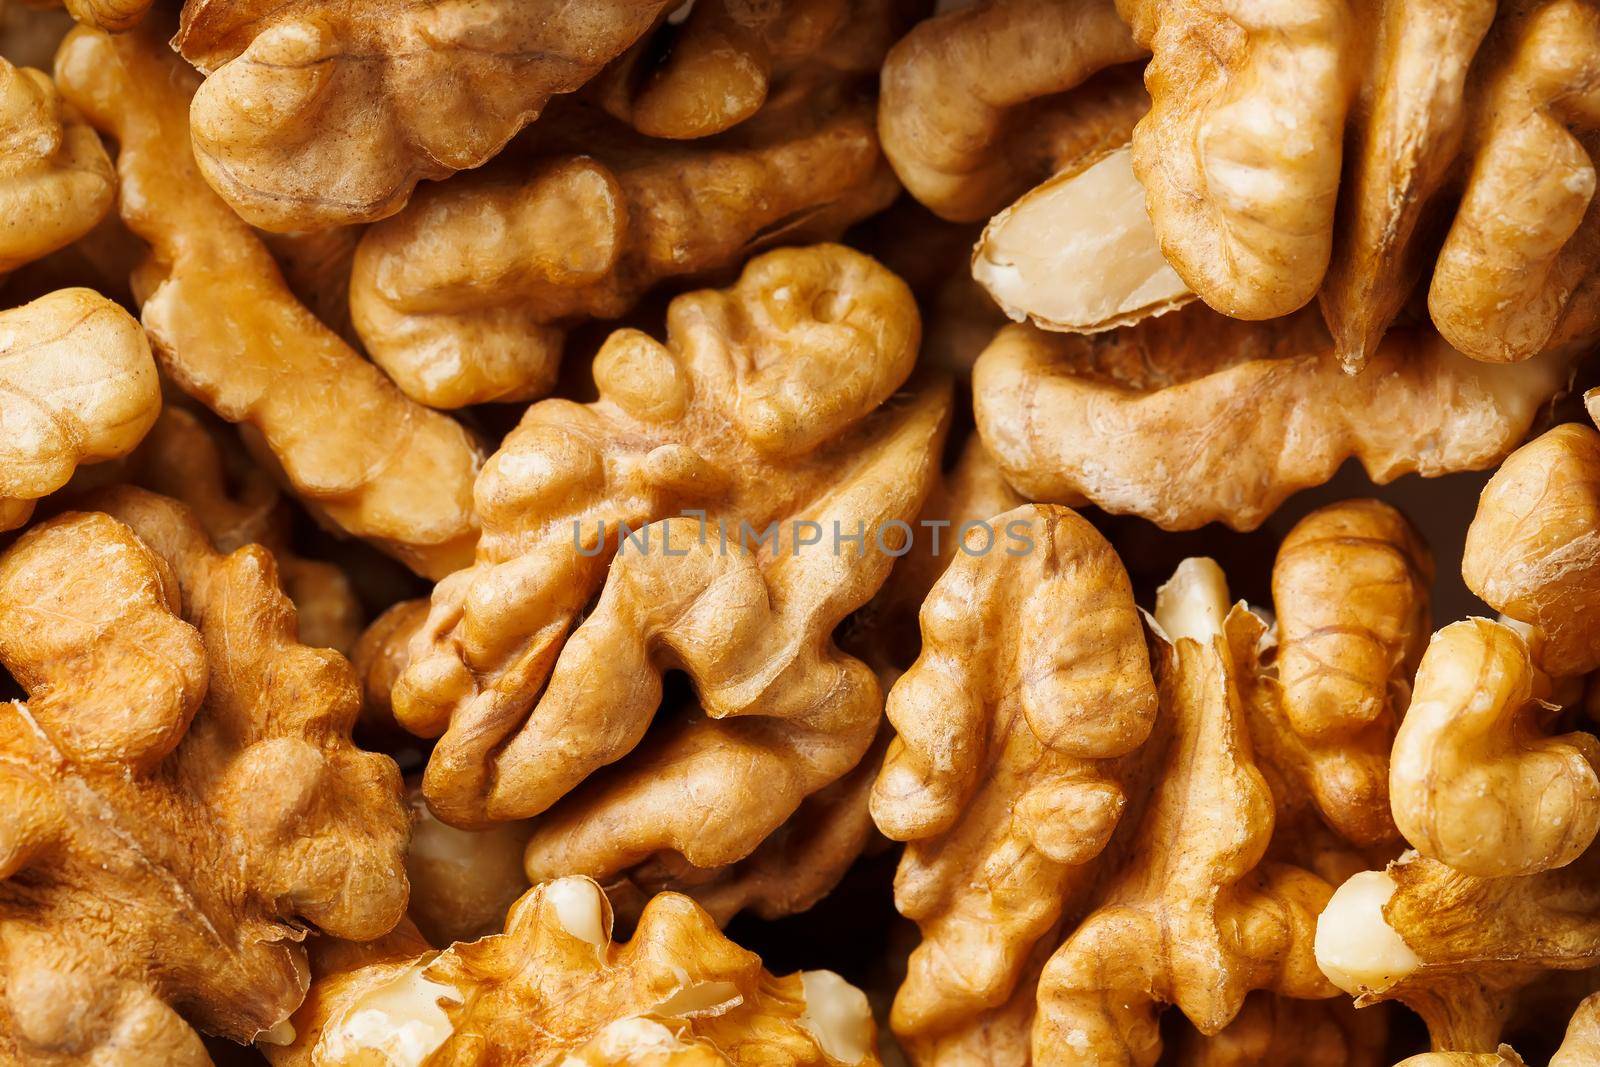 Walnuts sold in spice market.Walnuts Help Lower Cholesterol. Good grains eat healthy. by AlexGrec